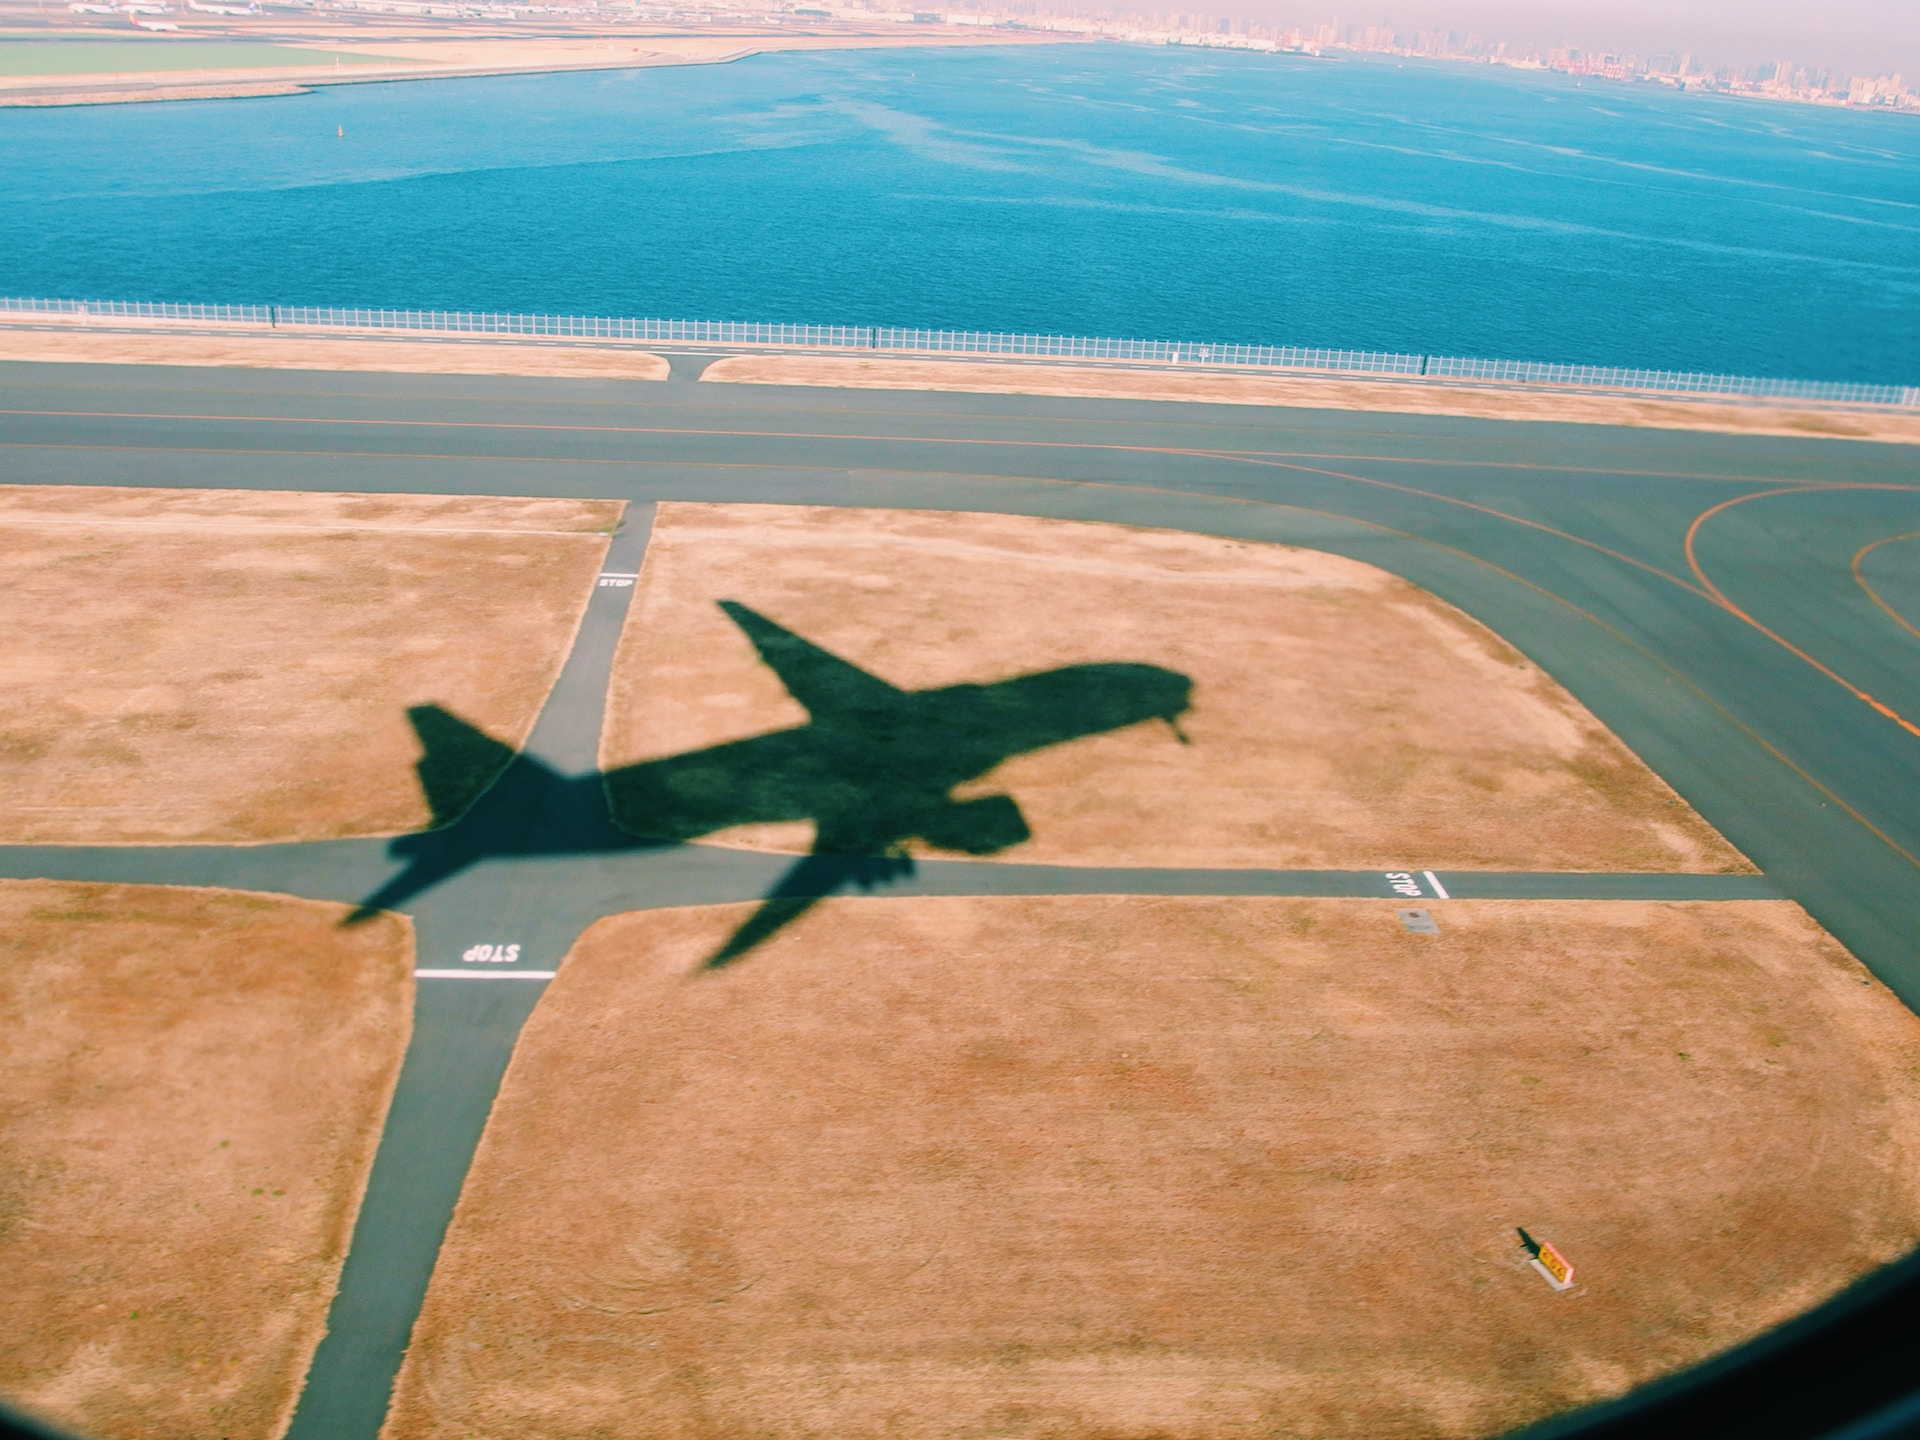 aeroplane shadow flying over airport runway